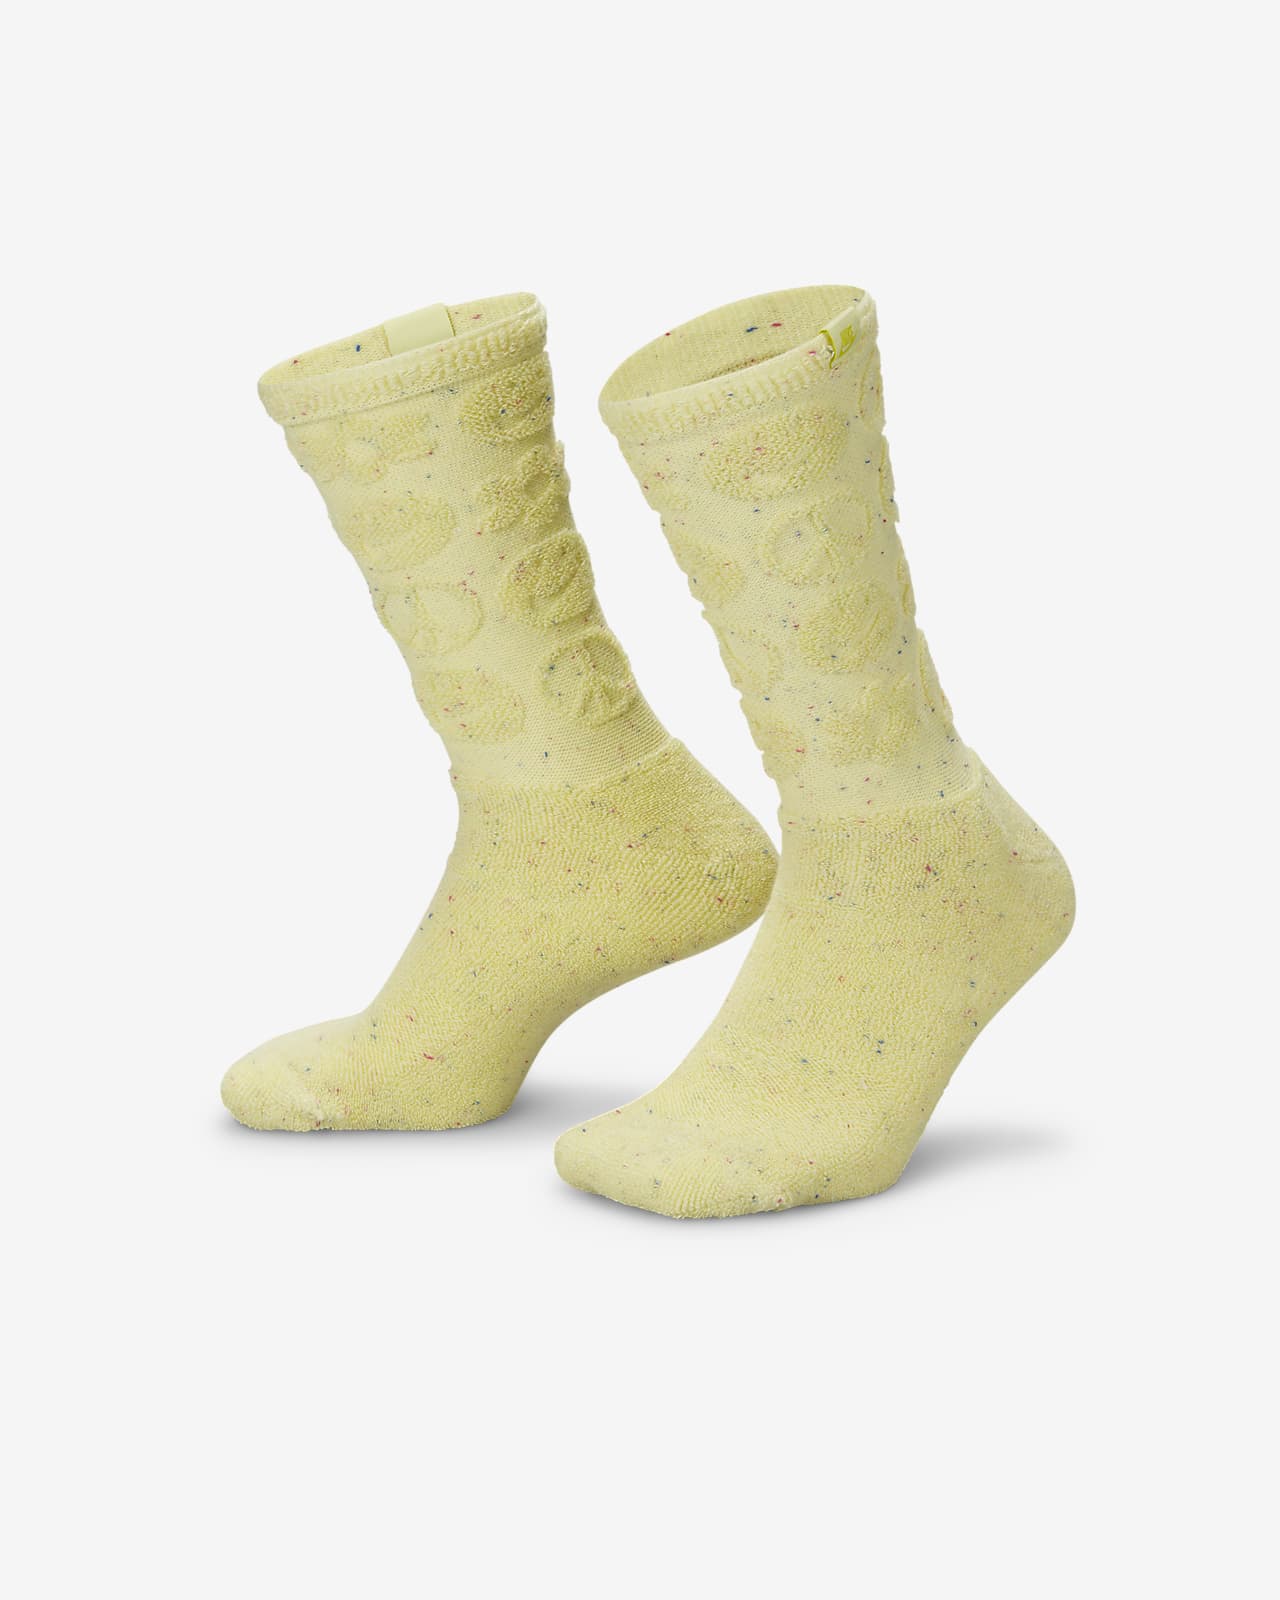 The Yellow Gym Standard  Socks, Cute socks, Sock shoes